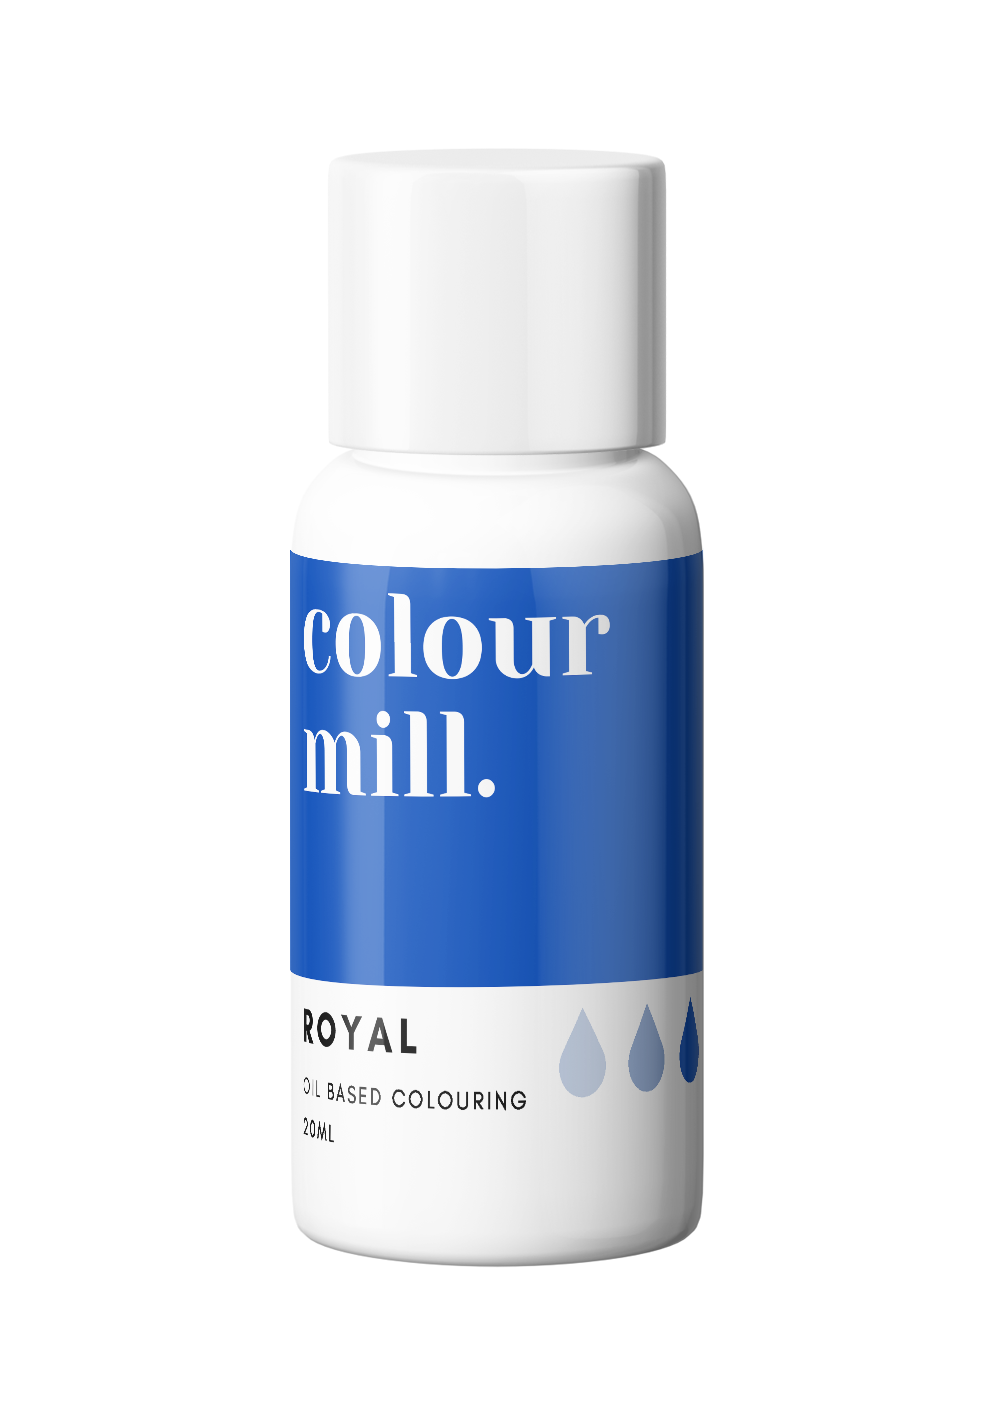 Colour Mill Royal